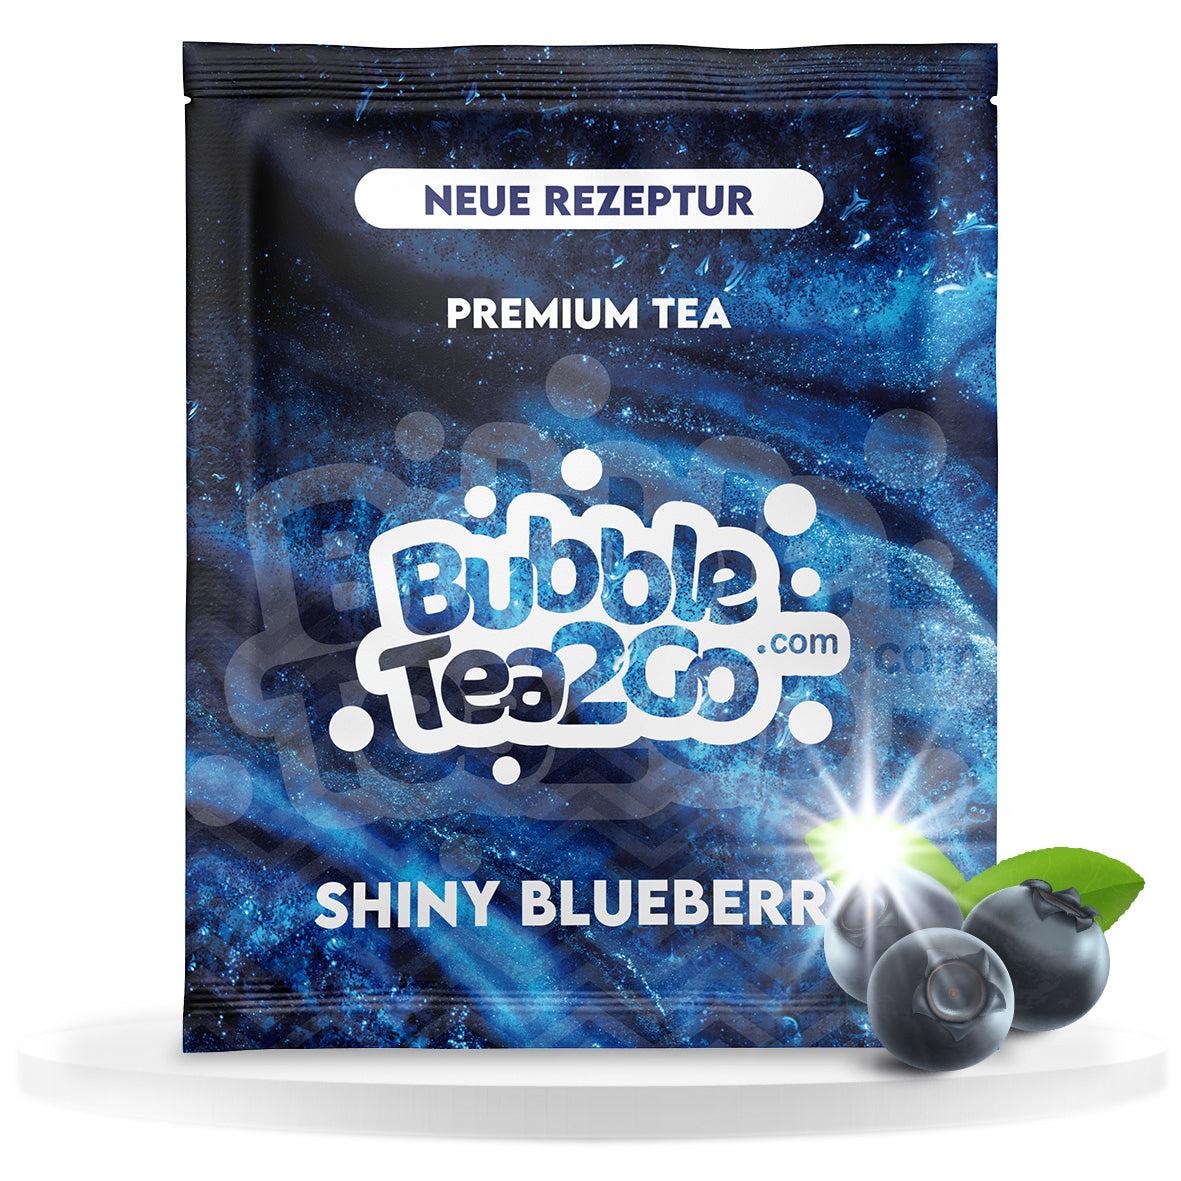 Premium Tea - Shiny Blueberry